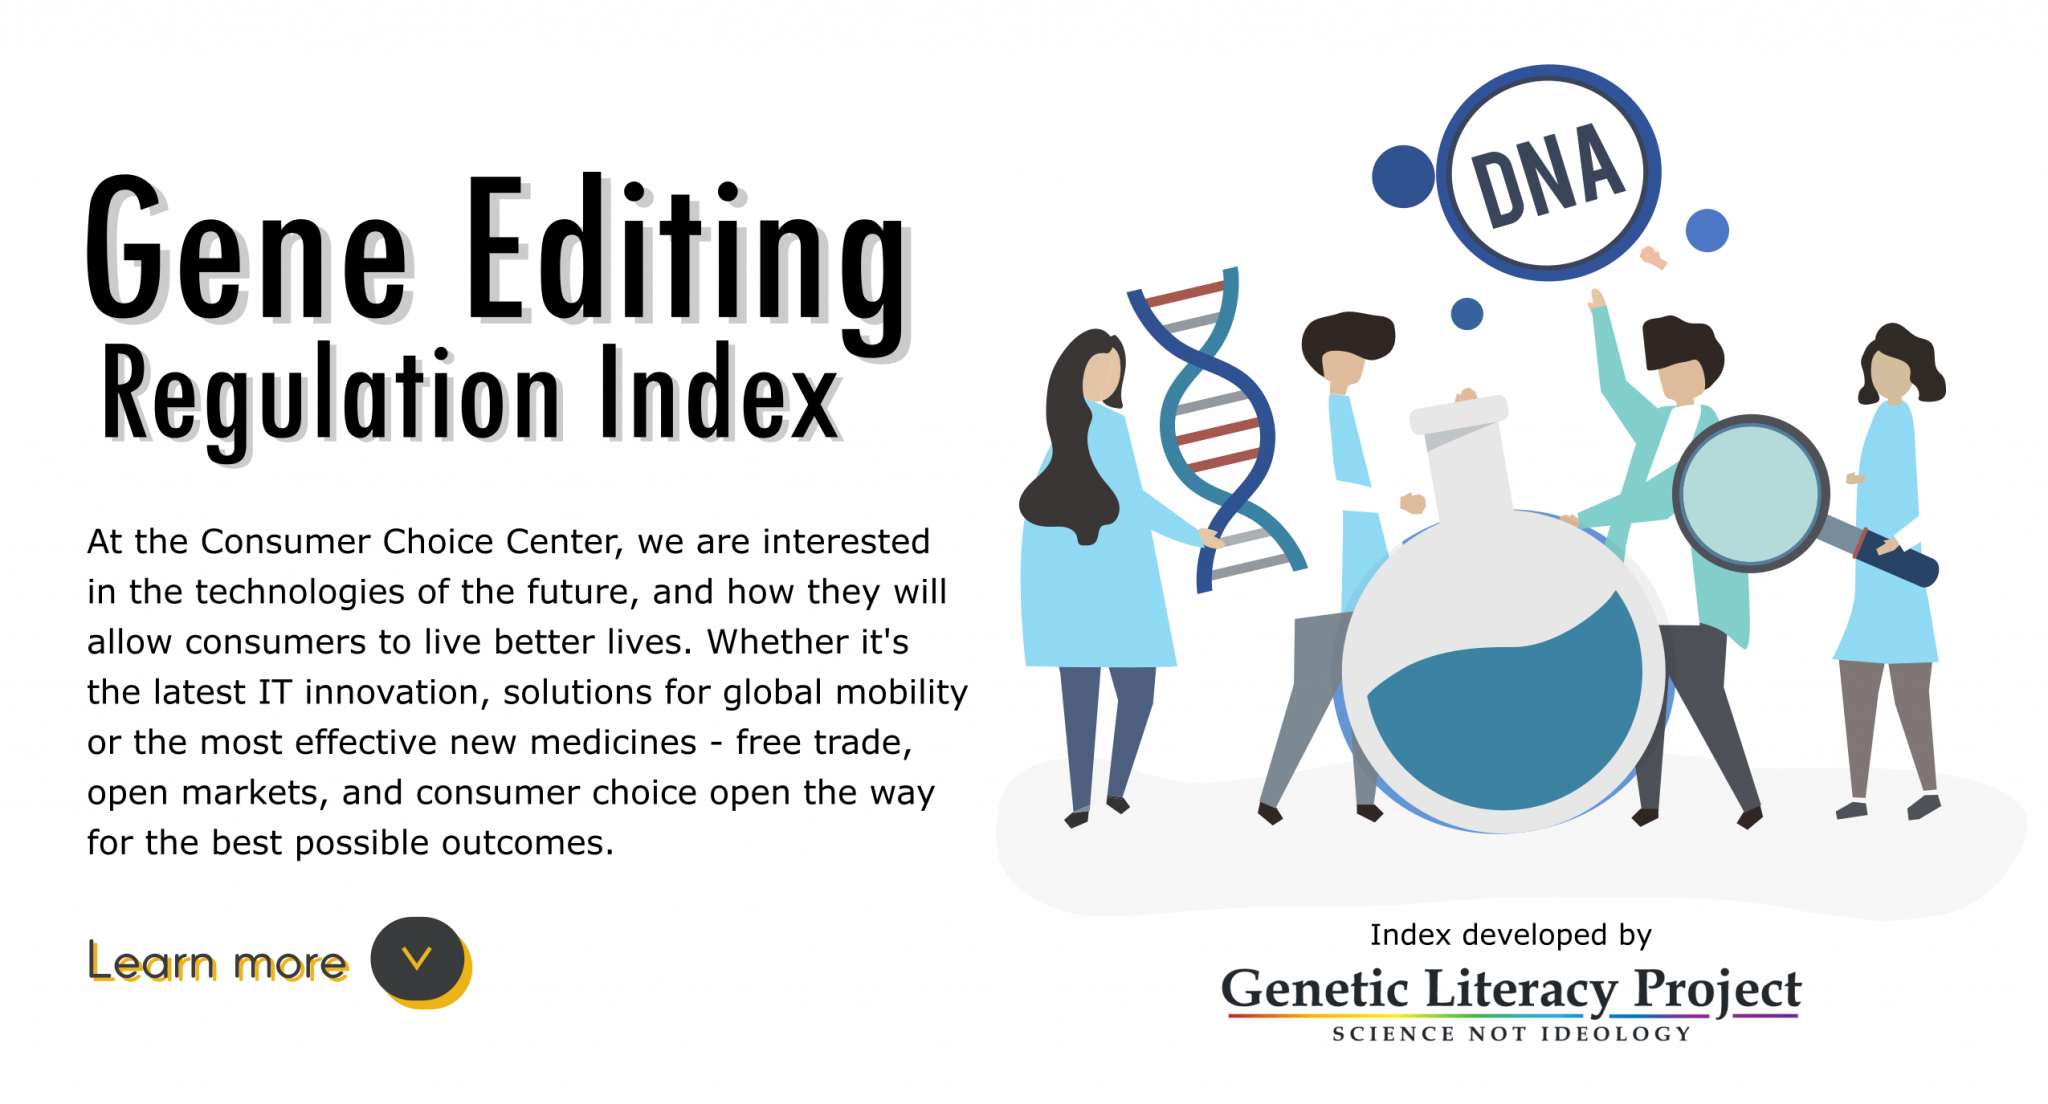 Global Gene Editing Regulation Index Consumer Choice Center